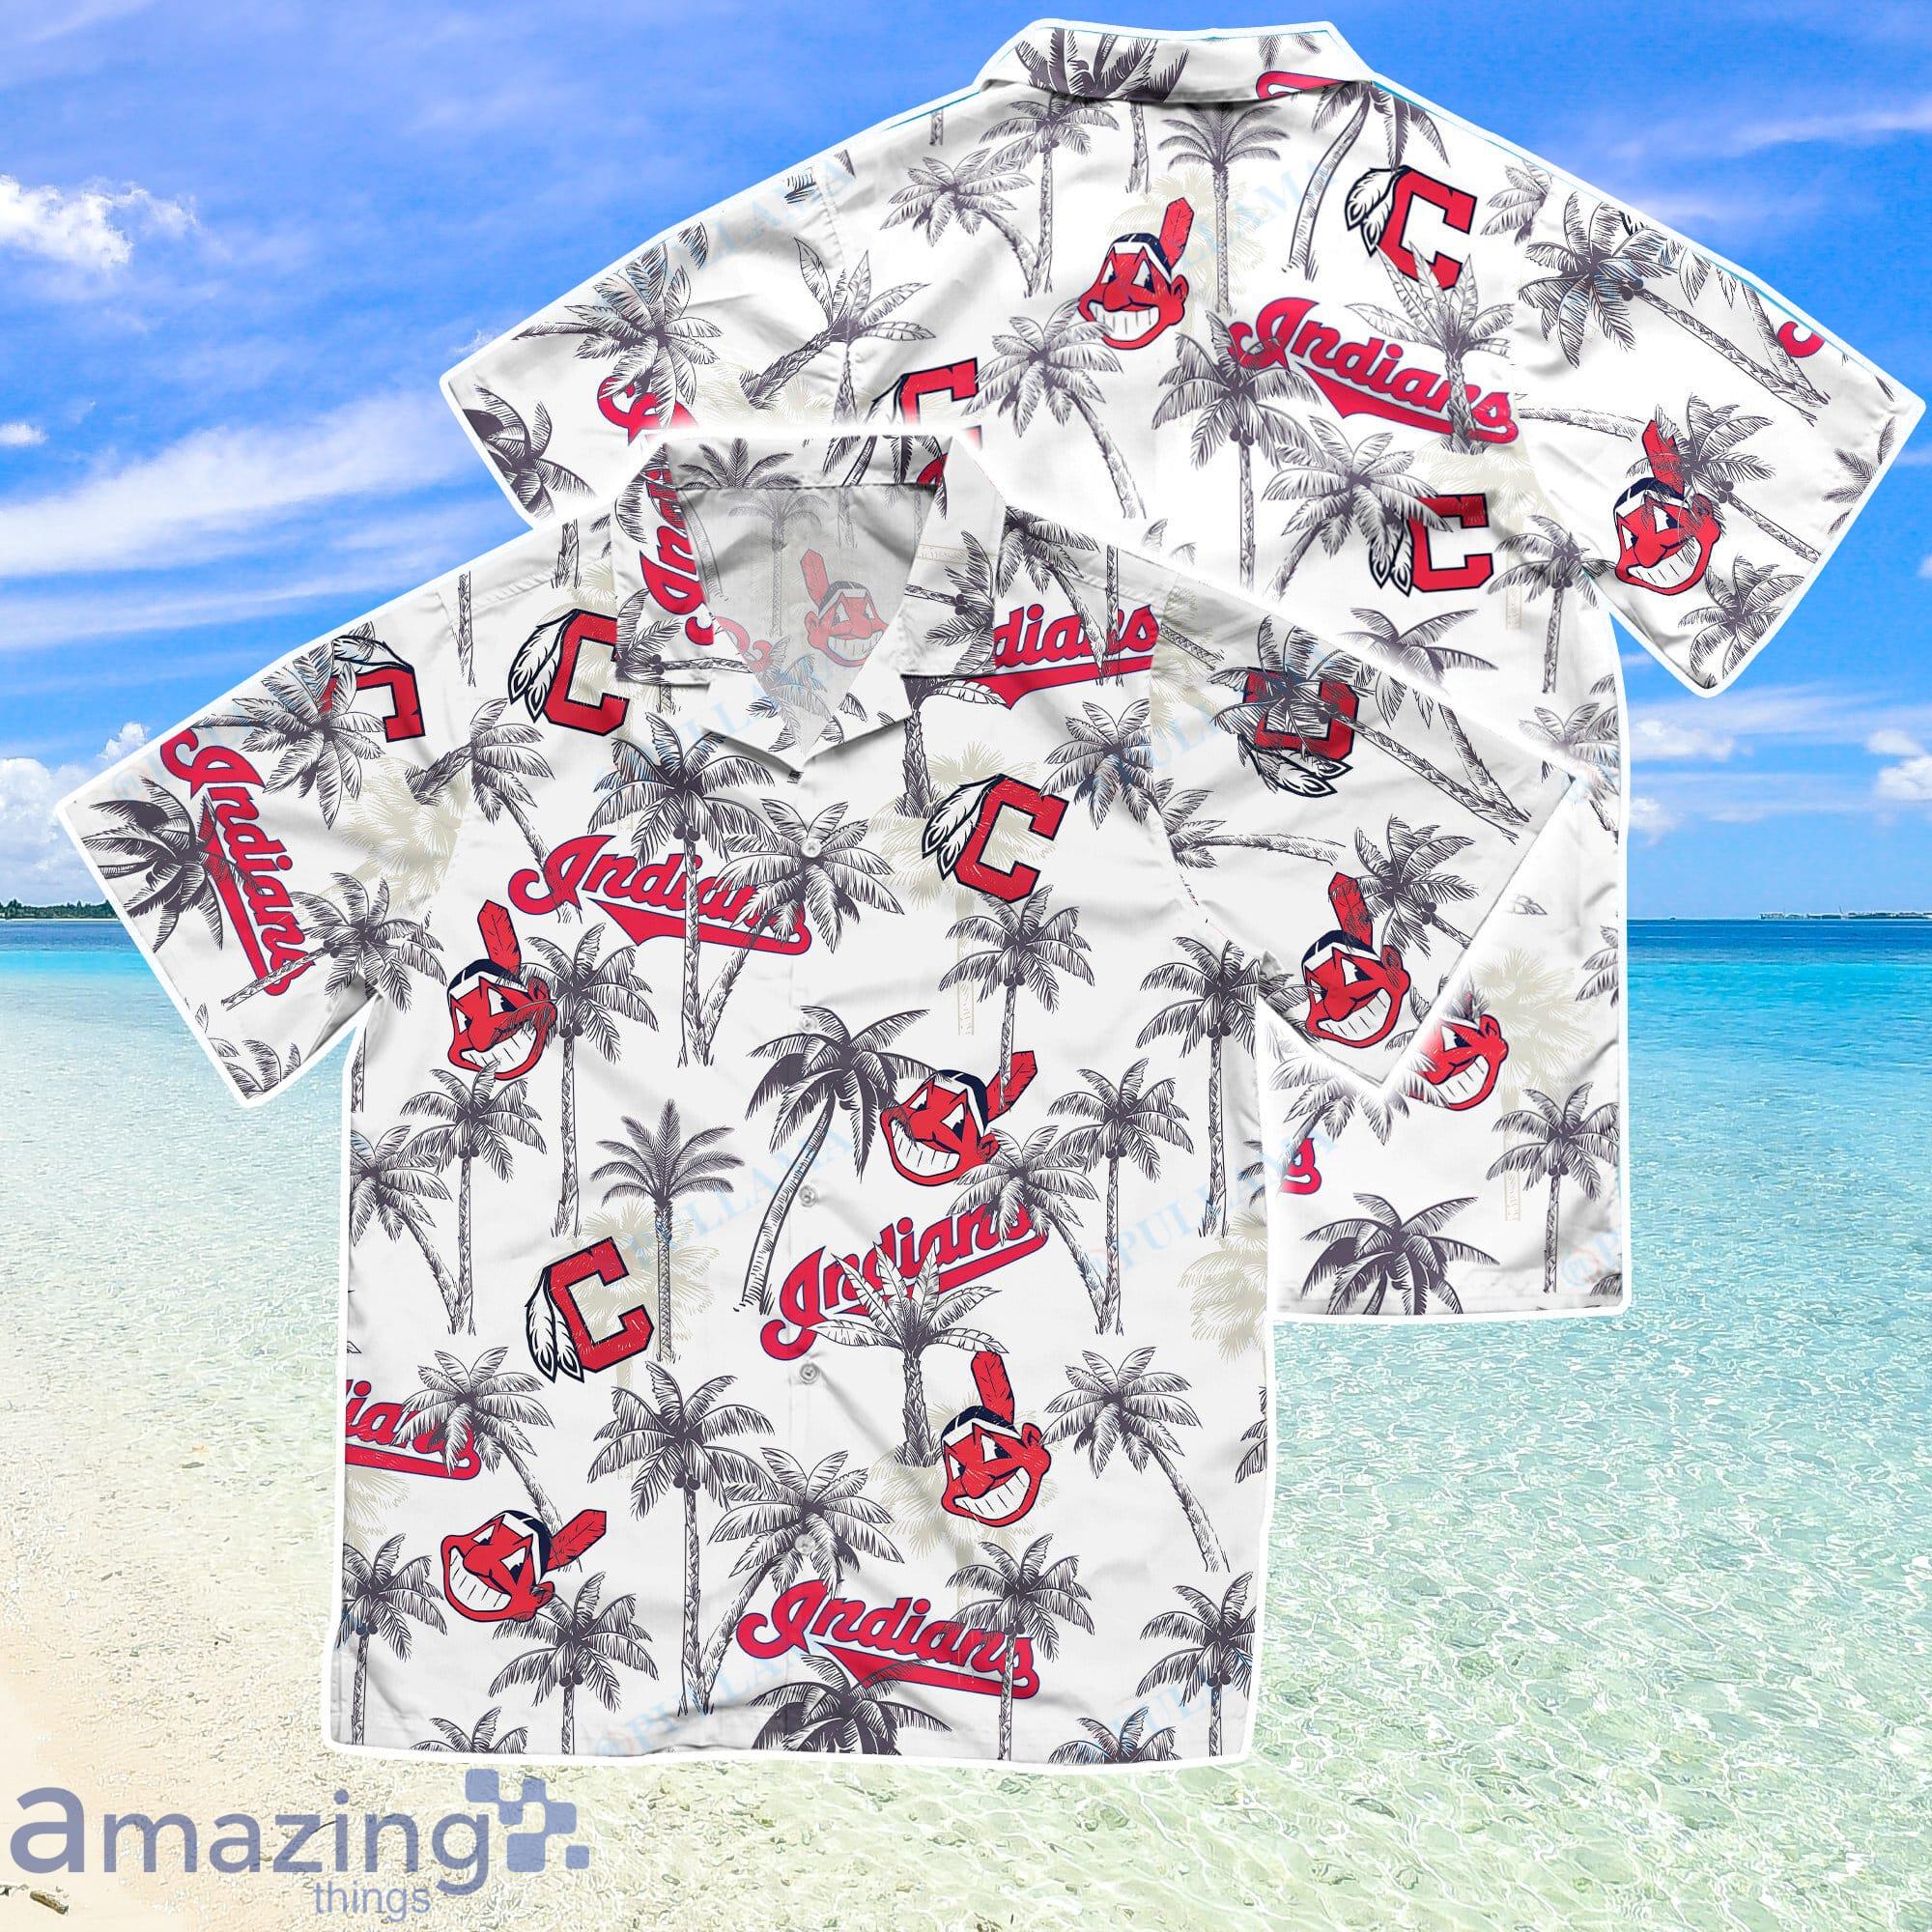 Cleveland Indians Hawaiian style shirt